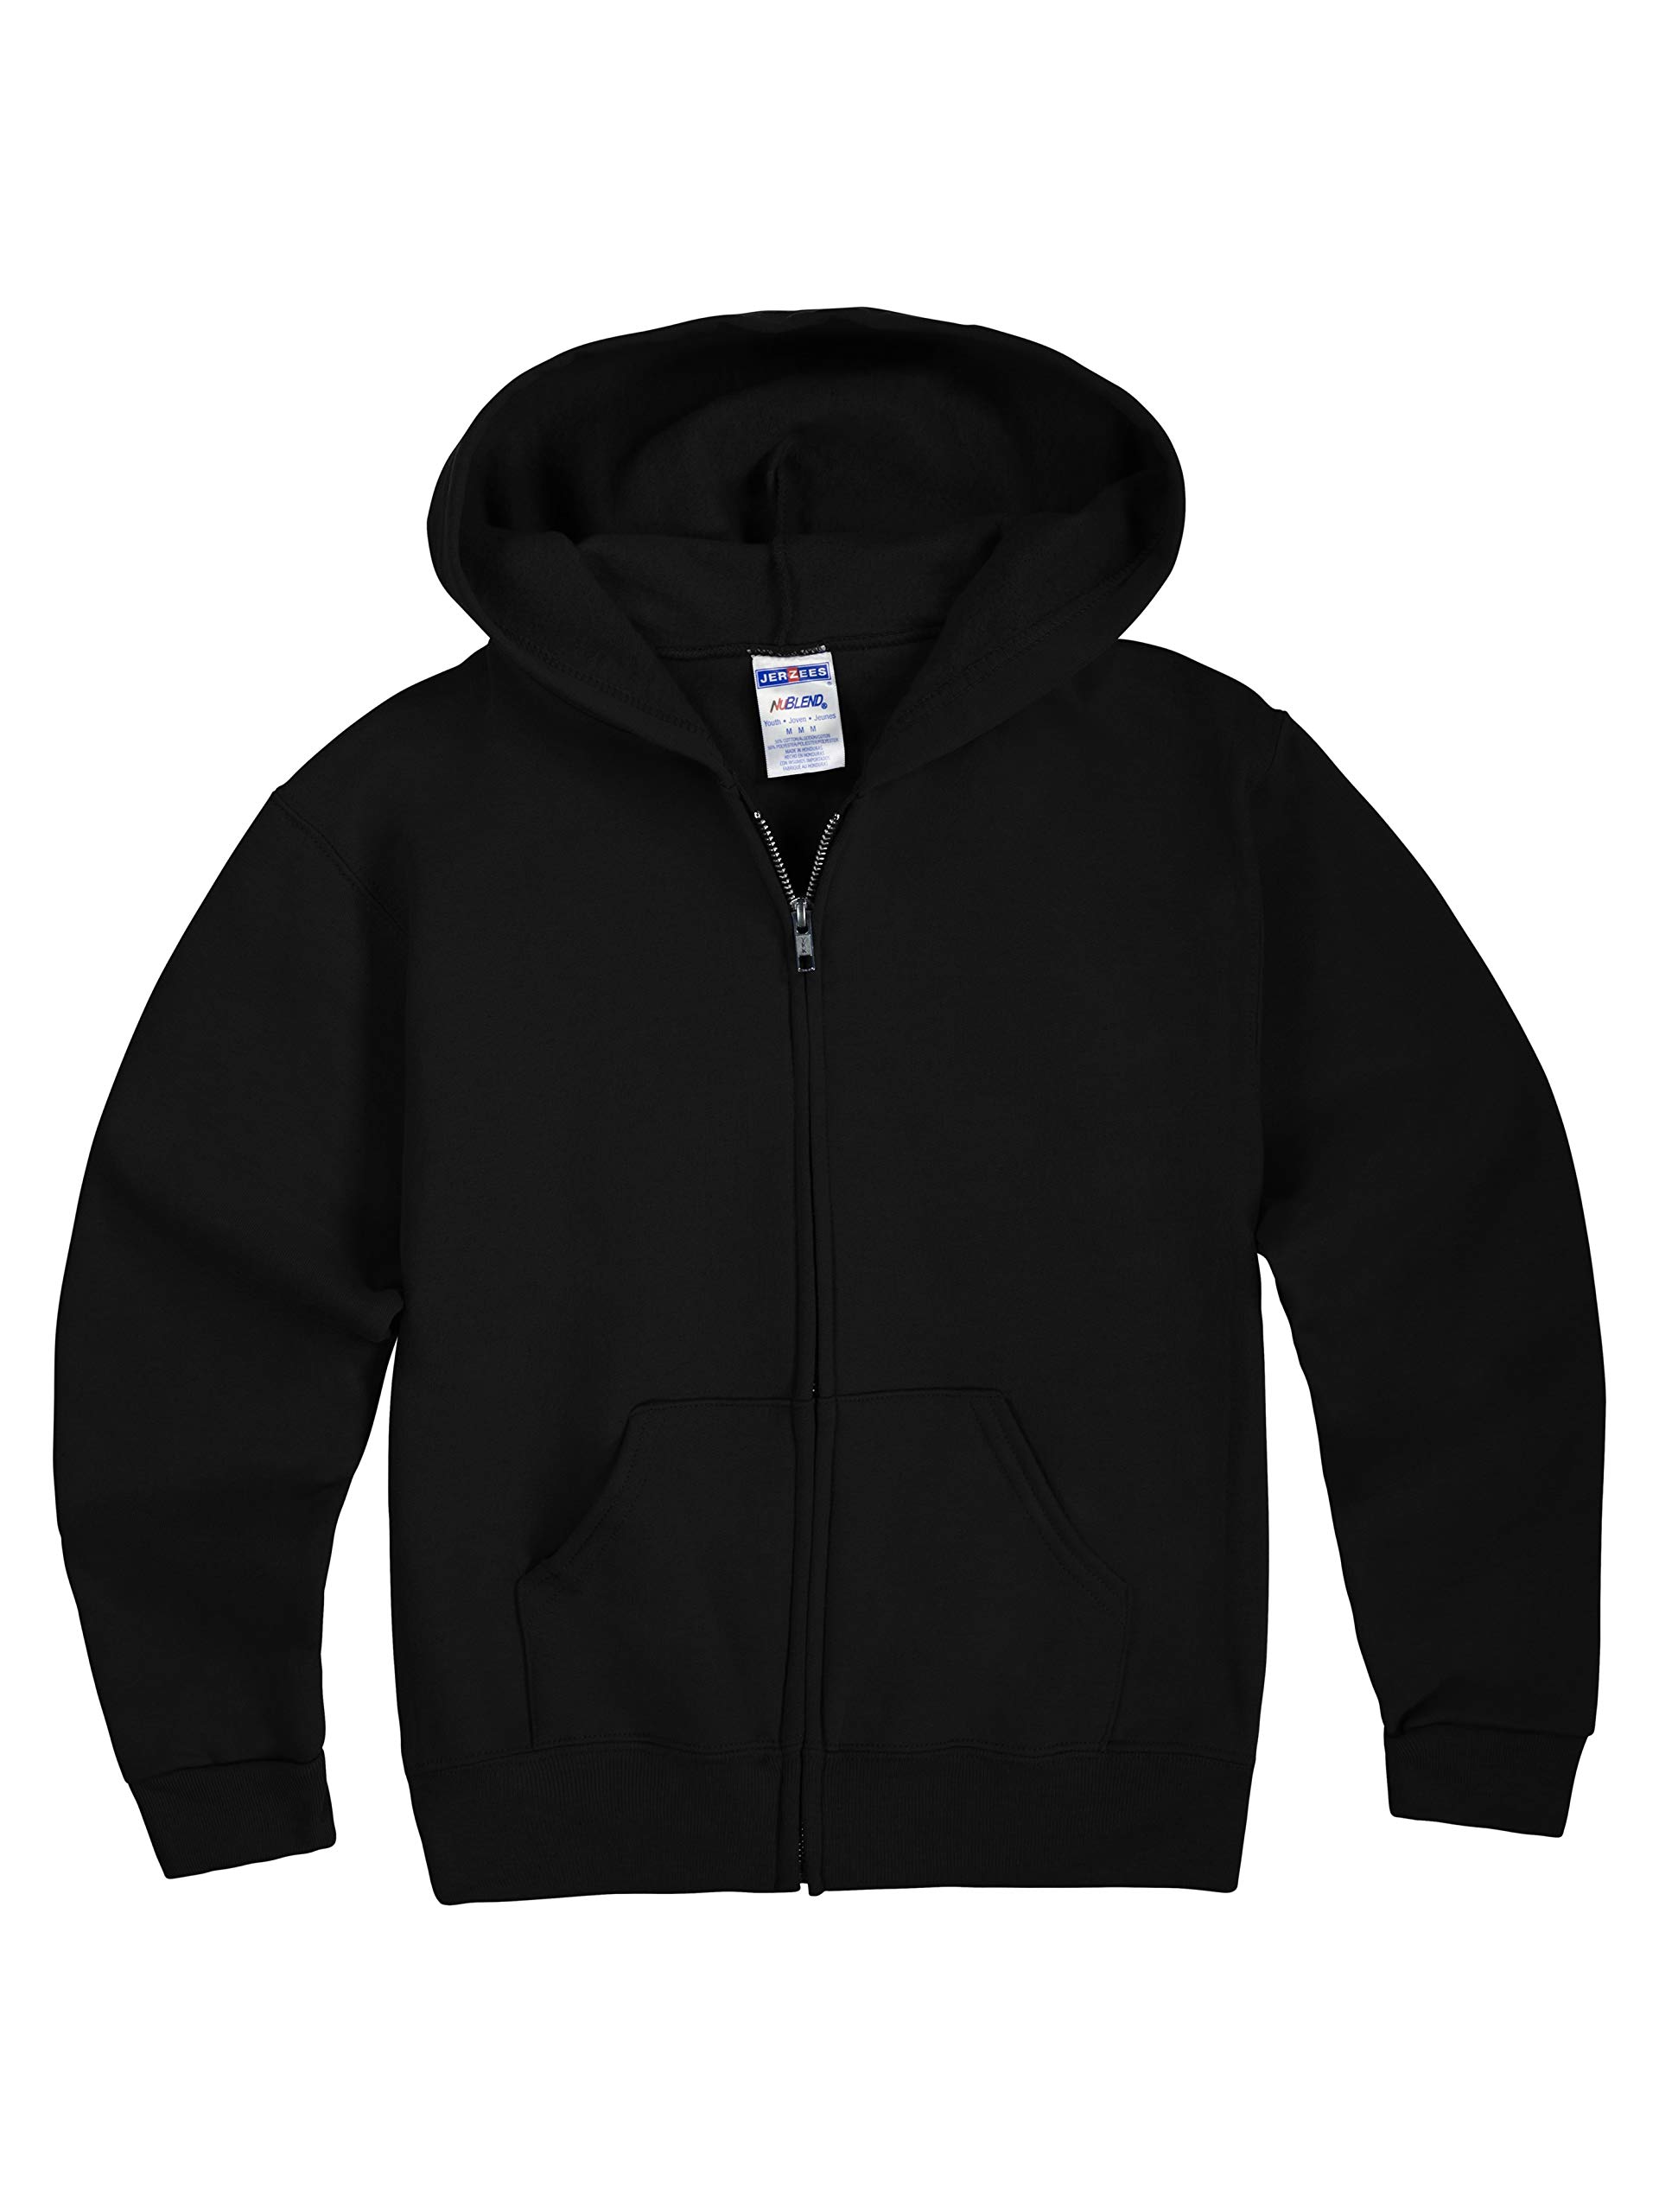 JERZEES Youth Nublend Fleece Sweatshirts & Hoodies, Cotton Blend, Sizes S-XL